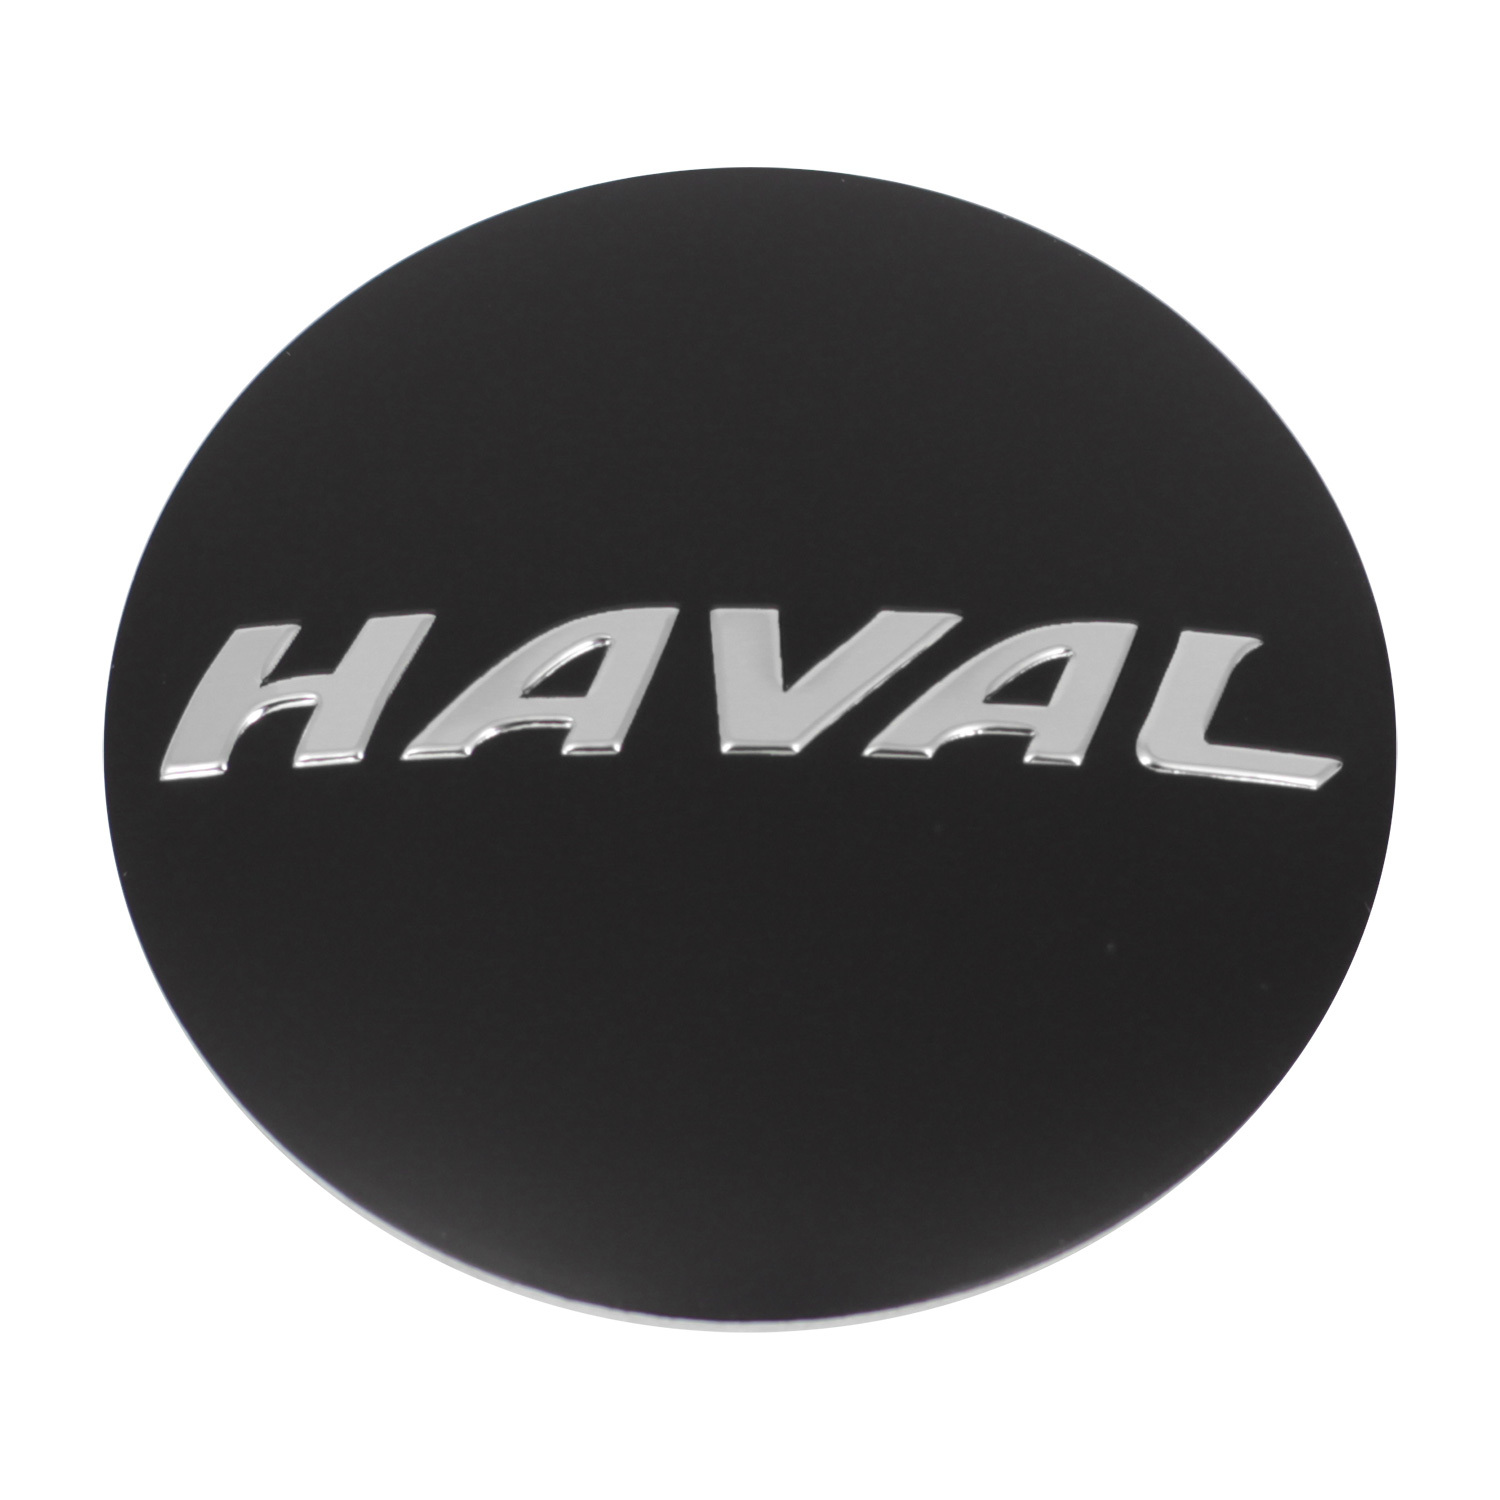 Вставка для диска Стикер СКАД с лого авто Haval (54 мм)